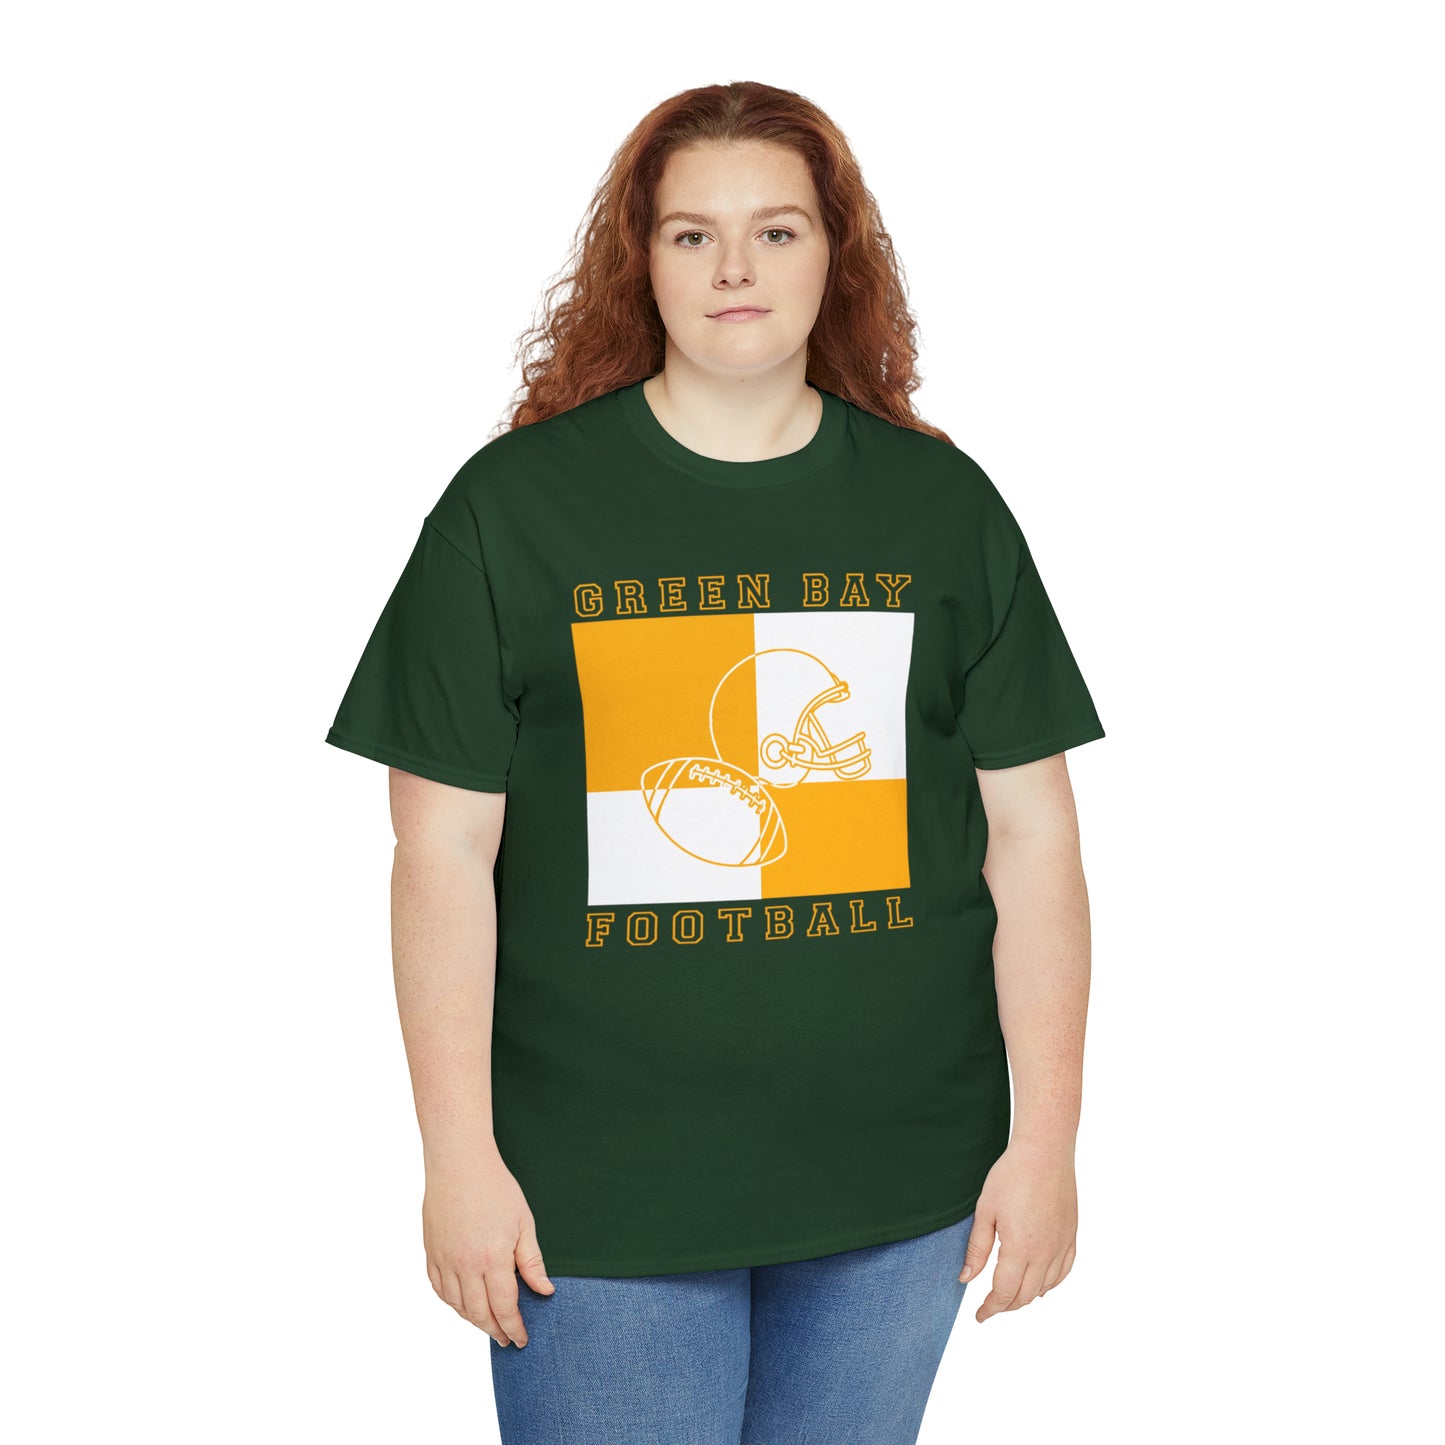 Green Bay Packers Football Tshirt